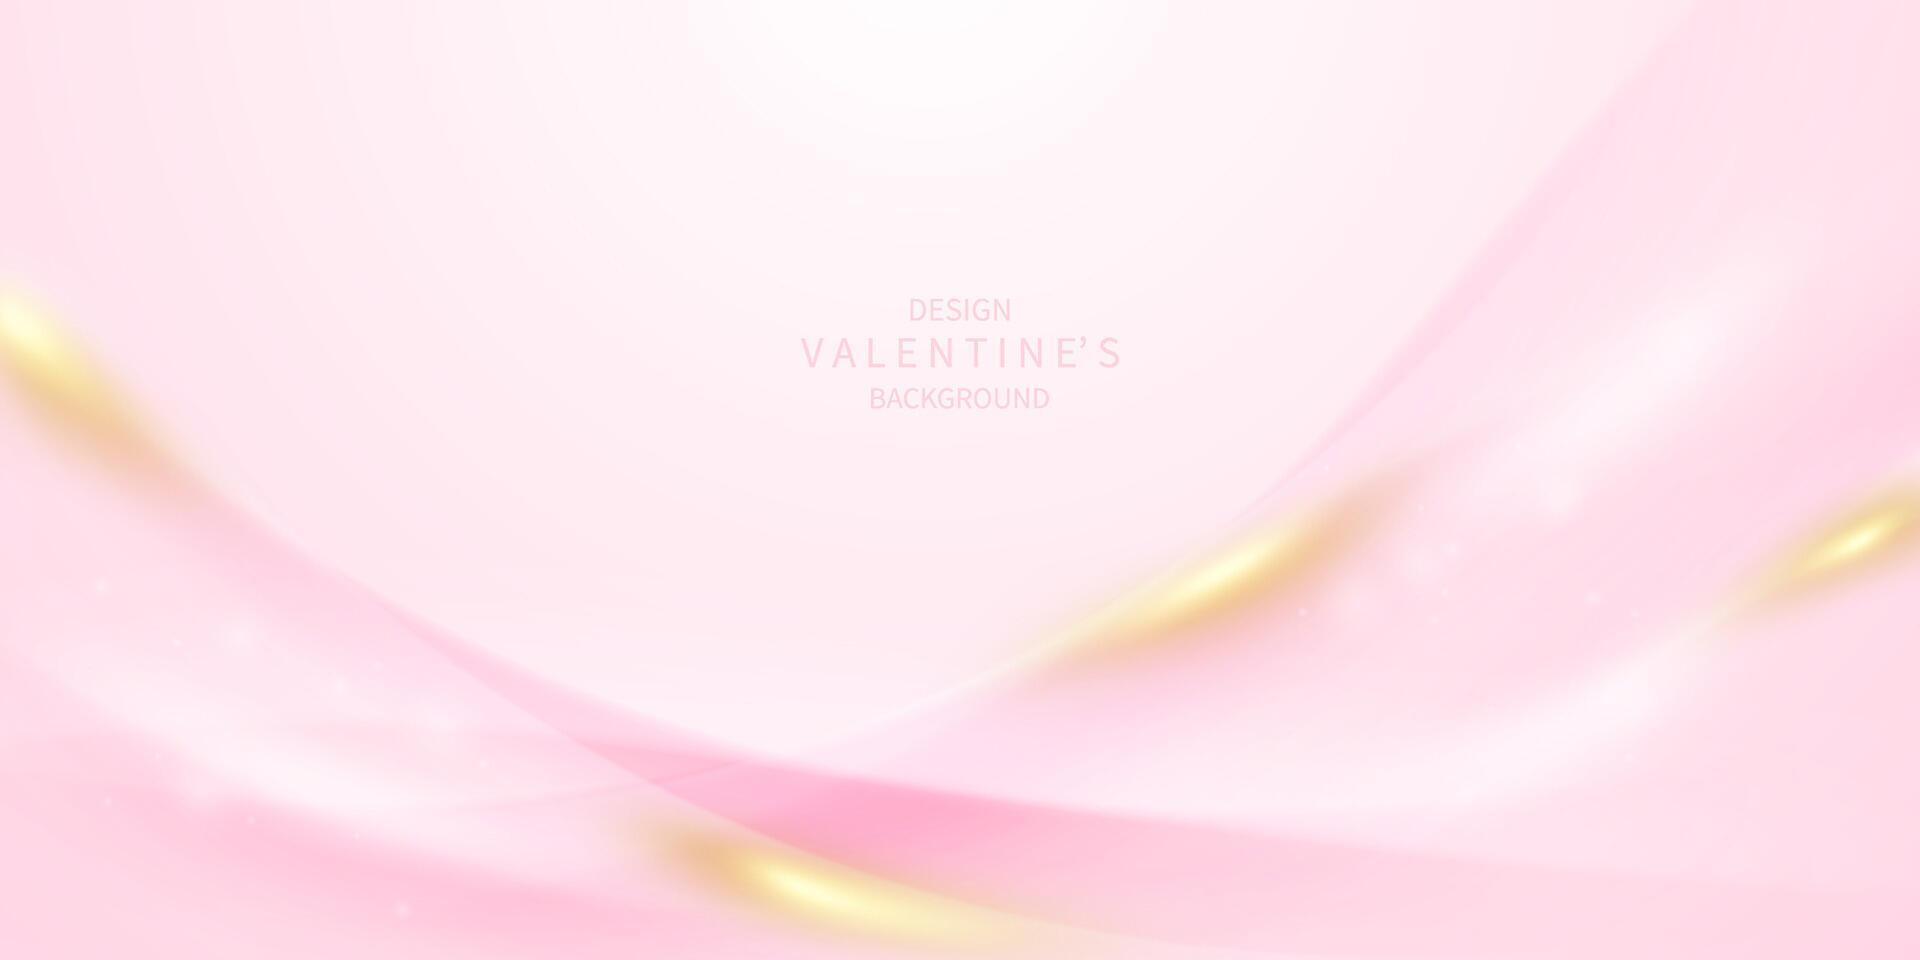 Background design for Happy Valentine's Day poster or voucher with elegant pink background. Vector illustration